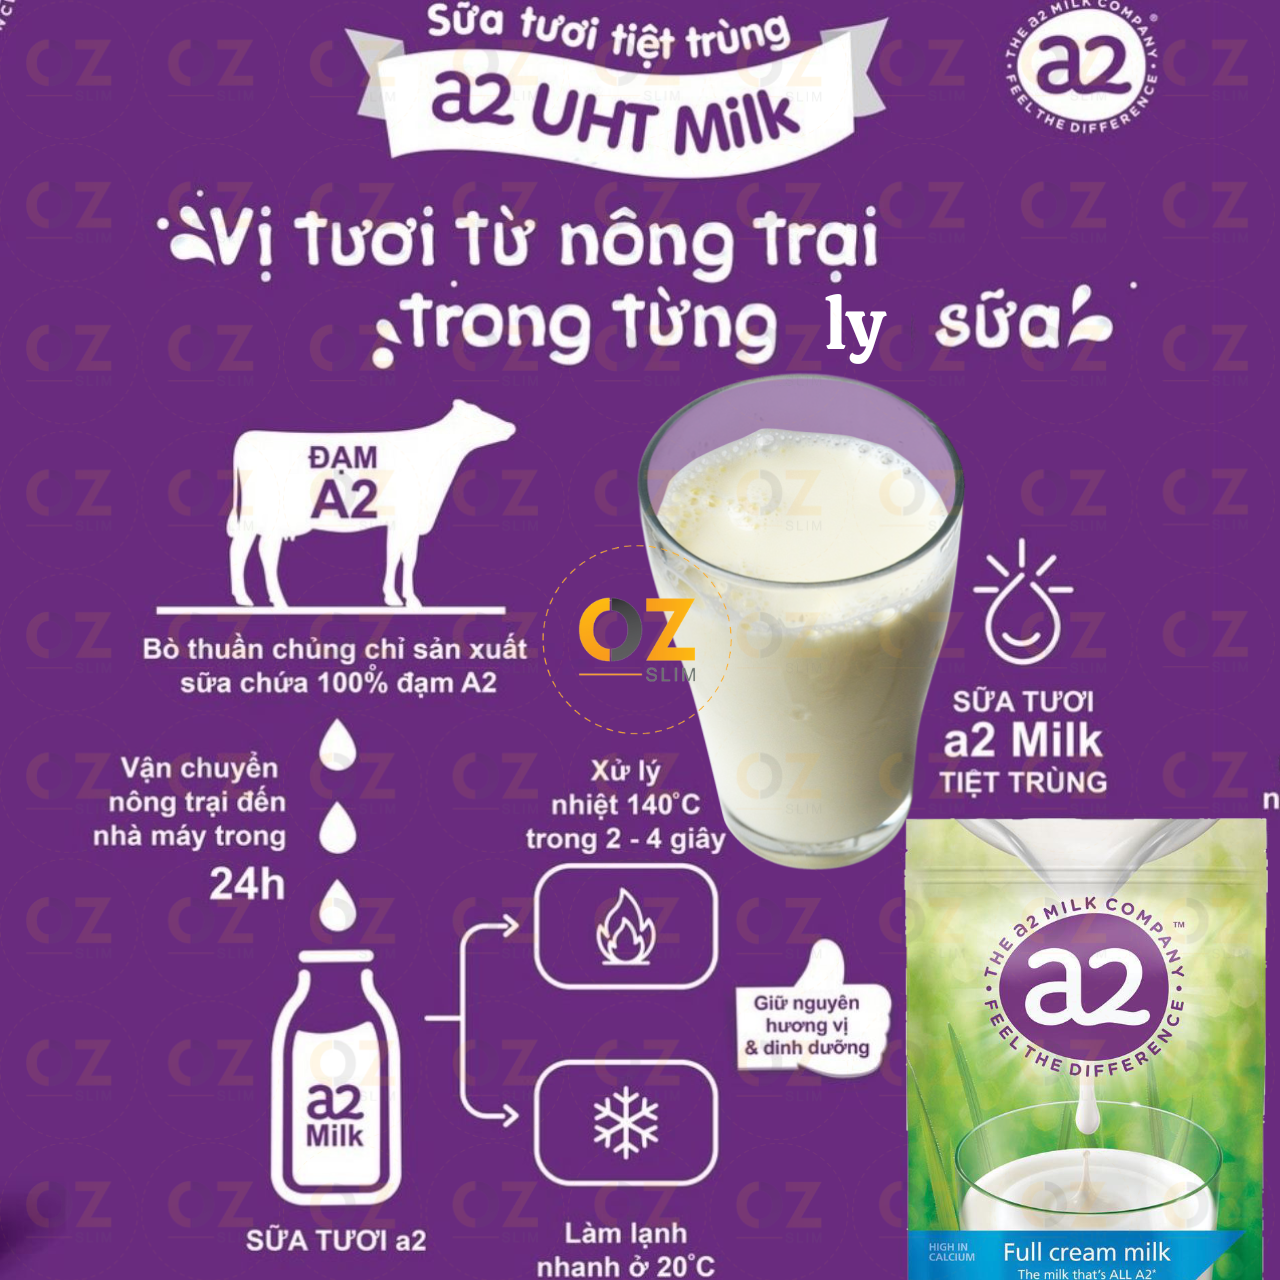 Sữa A2 uc nguyên kem full cream milk high in calcium 